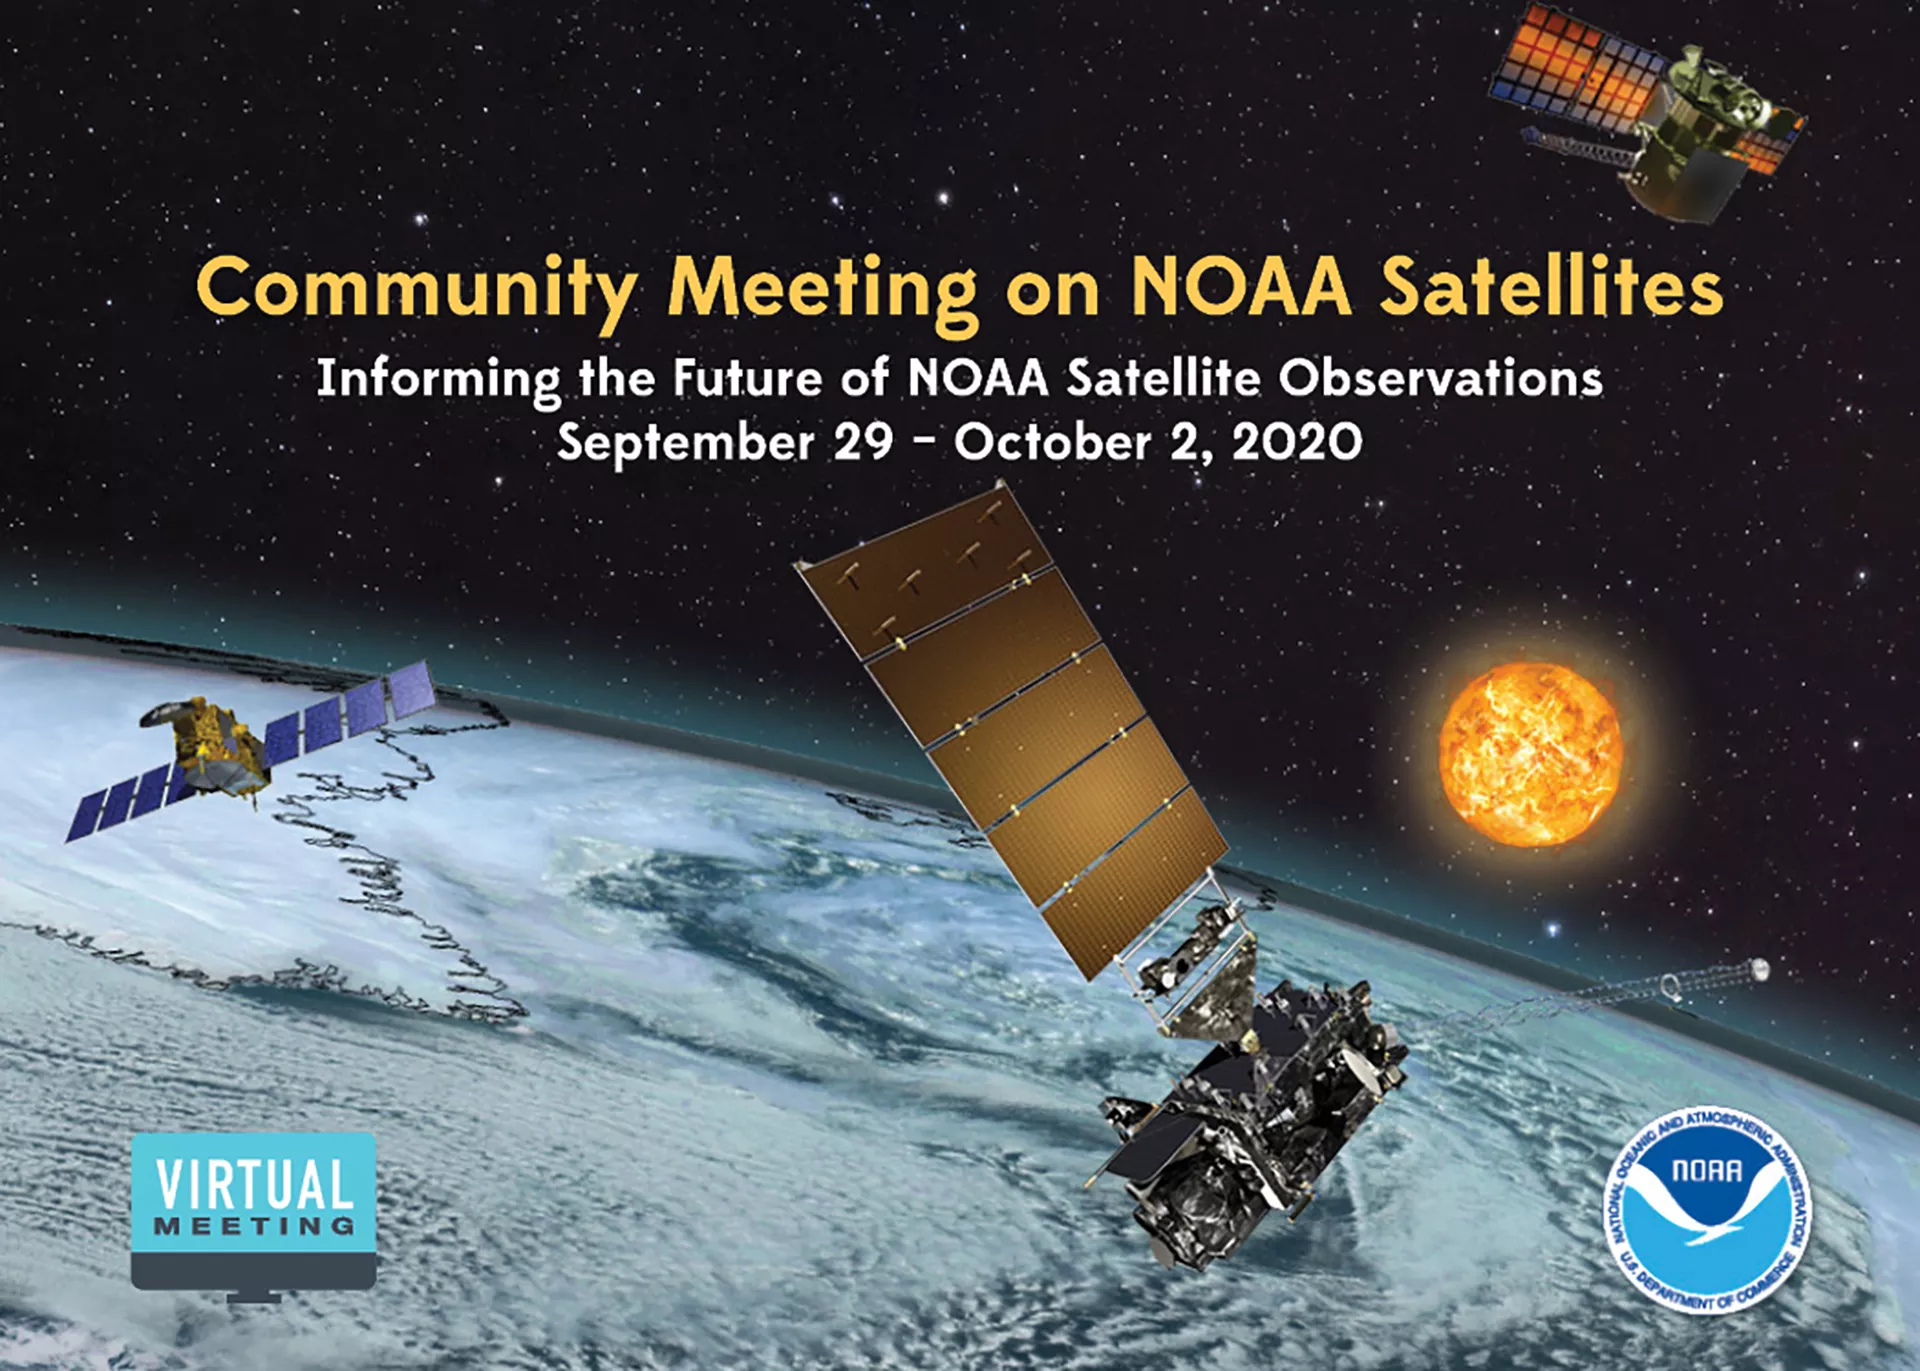 Community meeting on NOAA satellites - Informing the future of NOAA satellite observations. September 29, 2020 - October 2, 2020. Virtual meeting.